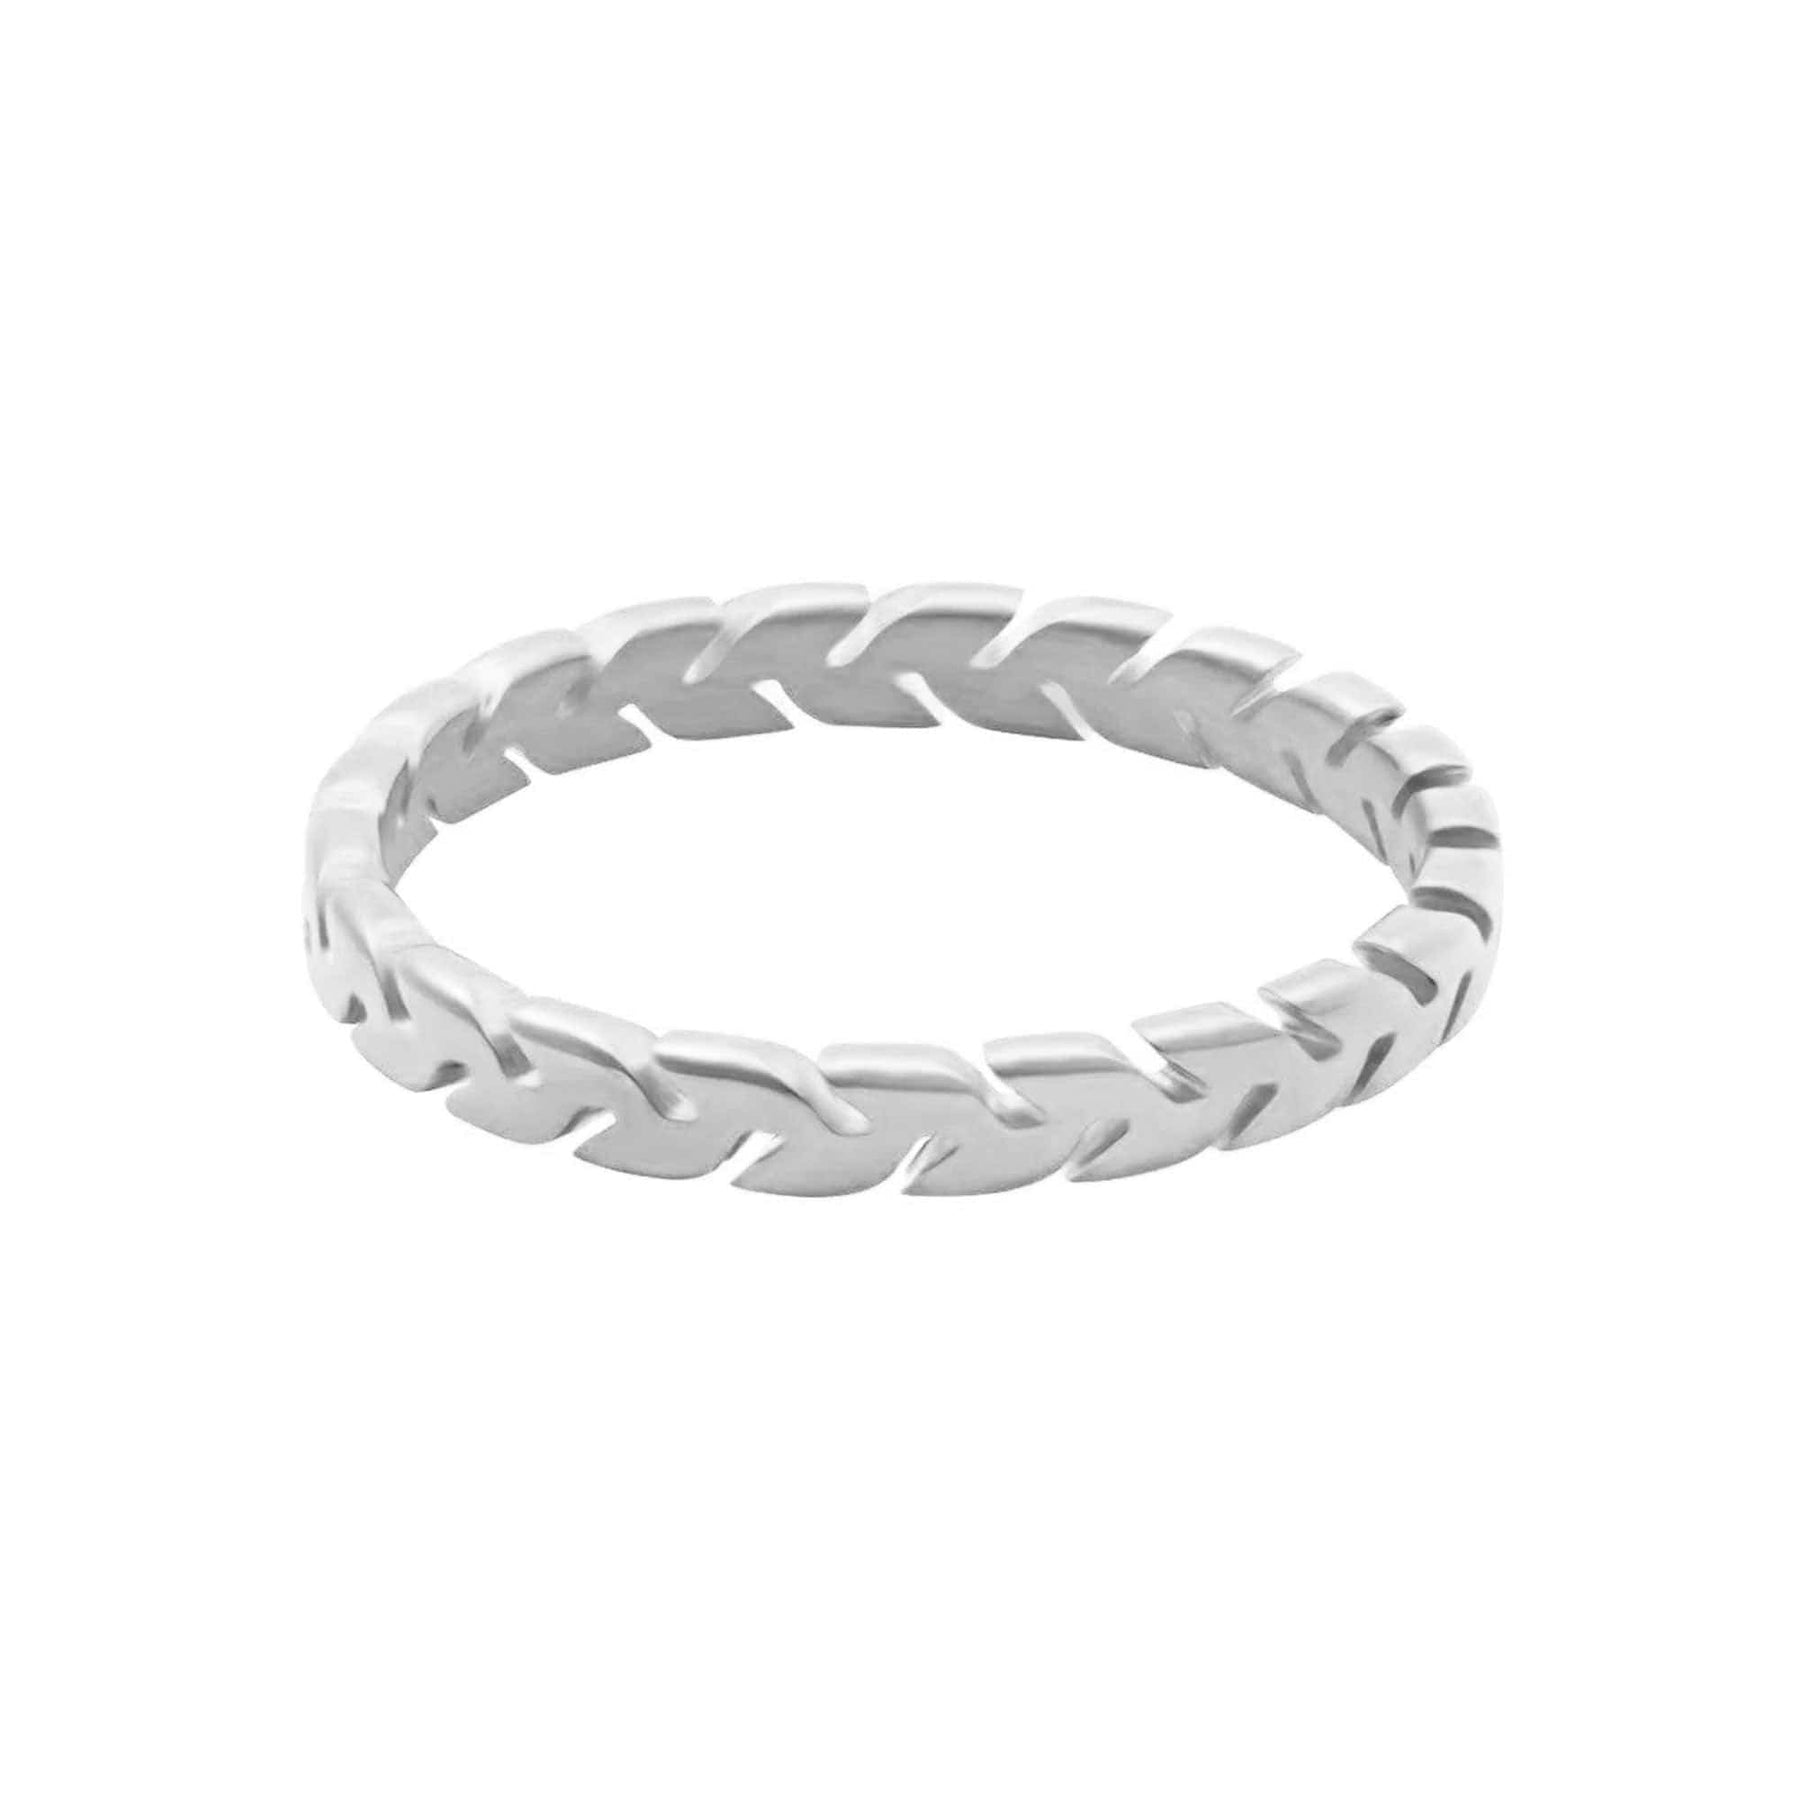 BohoMoon Stainless Steel Orbit Ring Silver / US 4 / UK H / EUR 46 / (xxsmall)